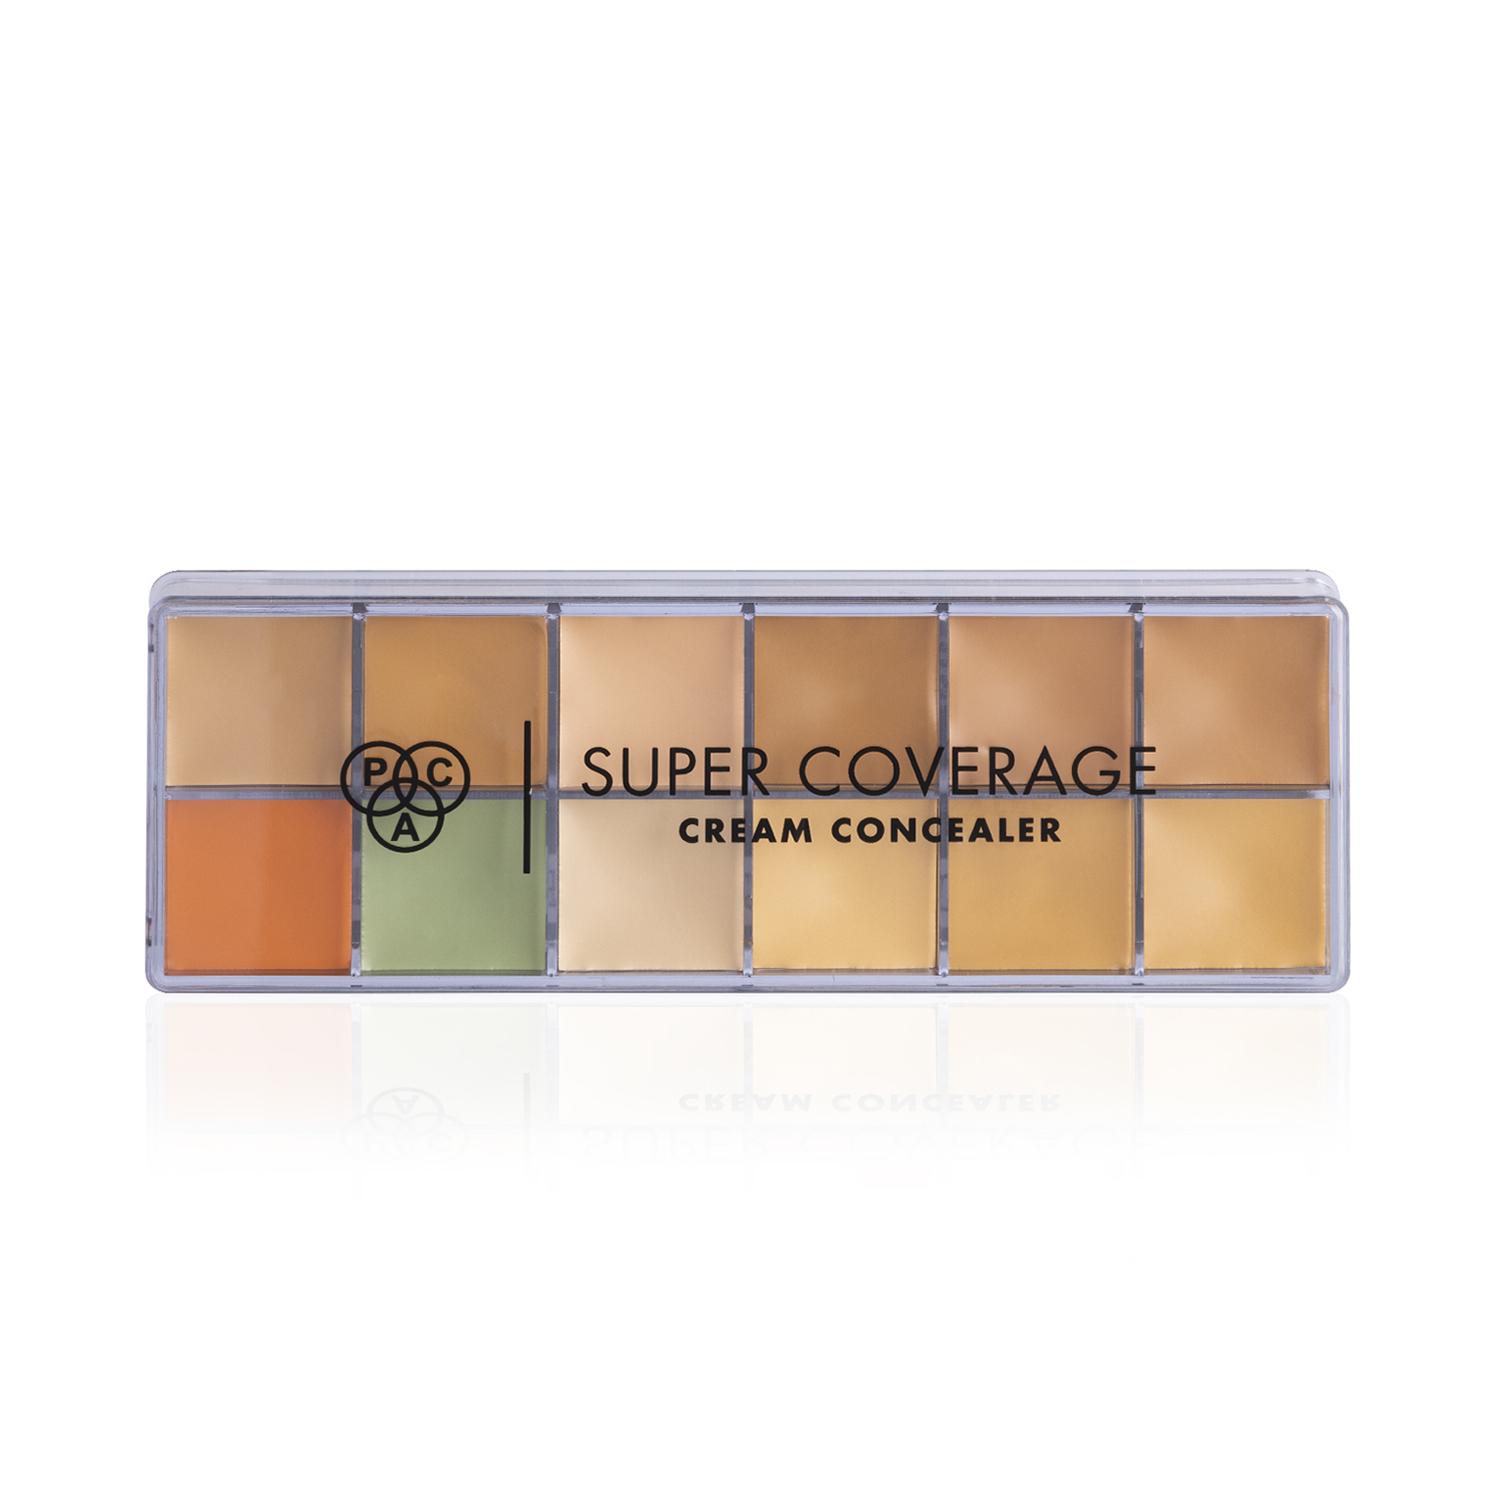 PAC | PAC Super Coverage Cream Concealer Palette - X12 Shade (7.5g)